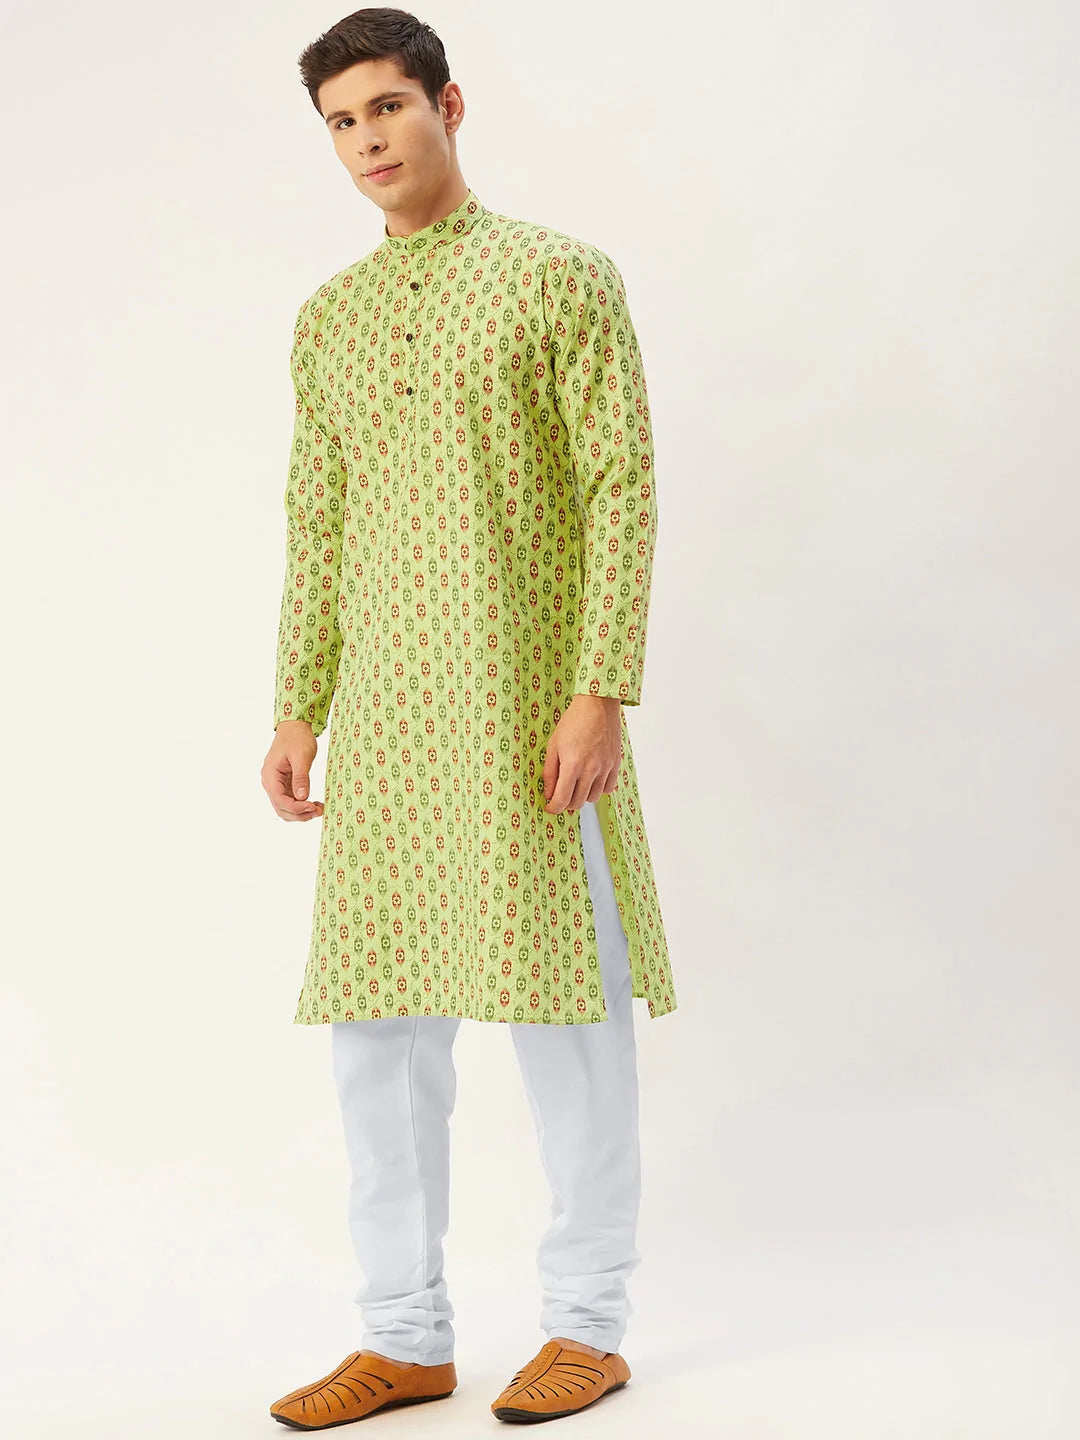 Jompers Men's Green Cotton Ikat printed kurta Only( KO 651 Green )